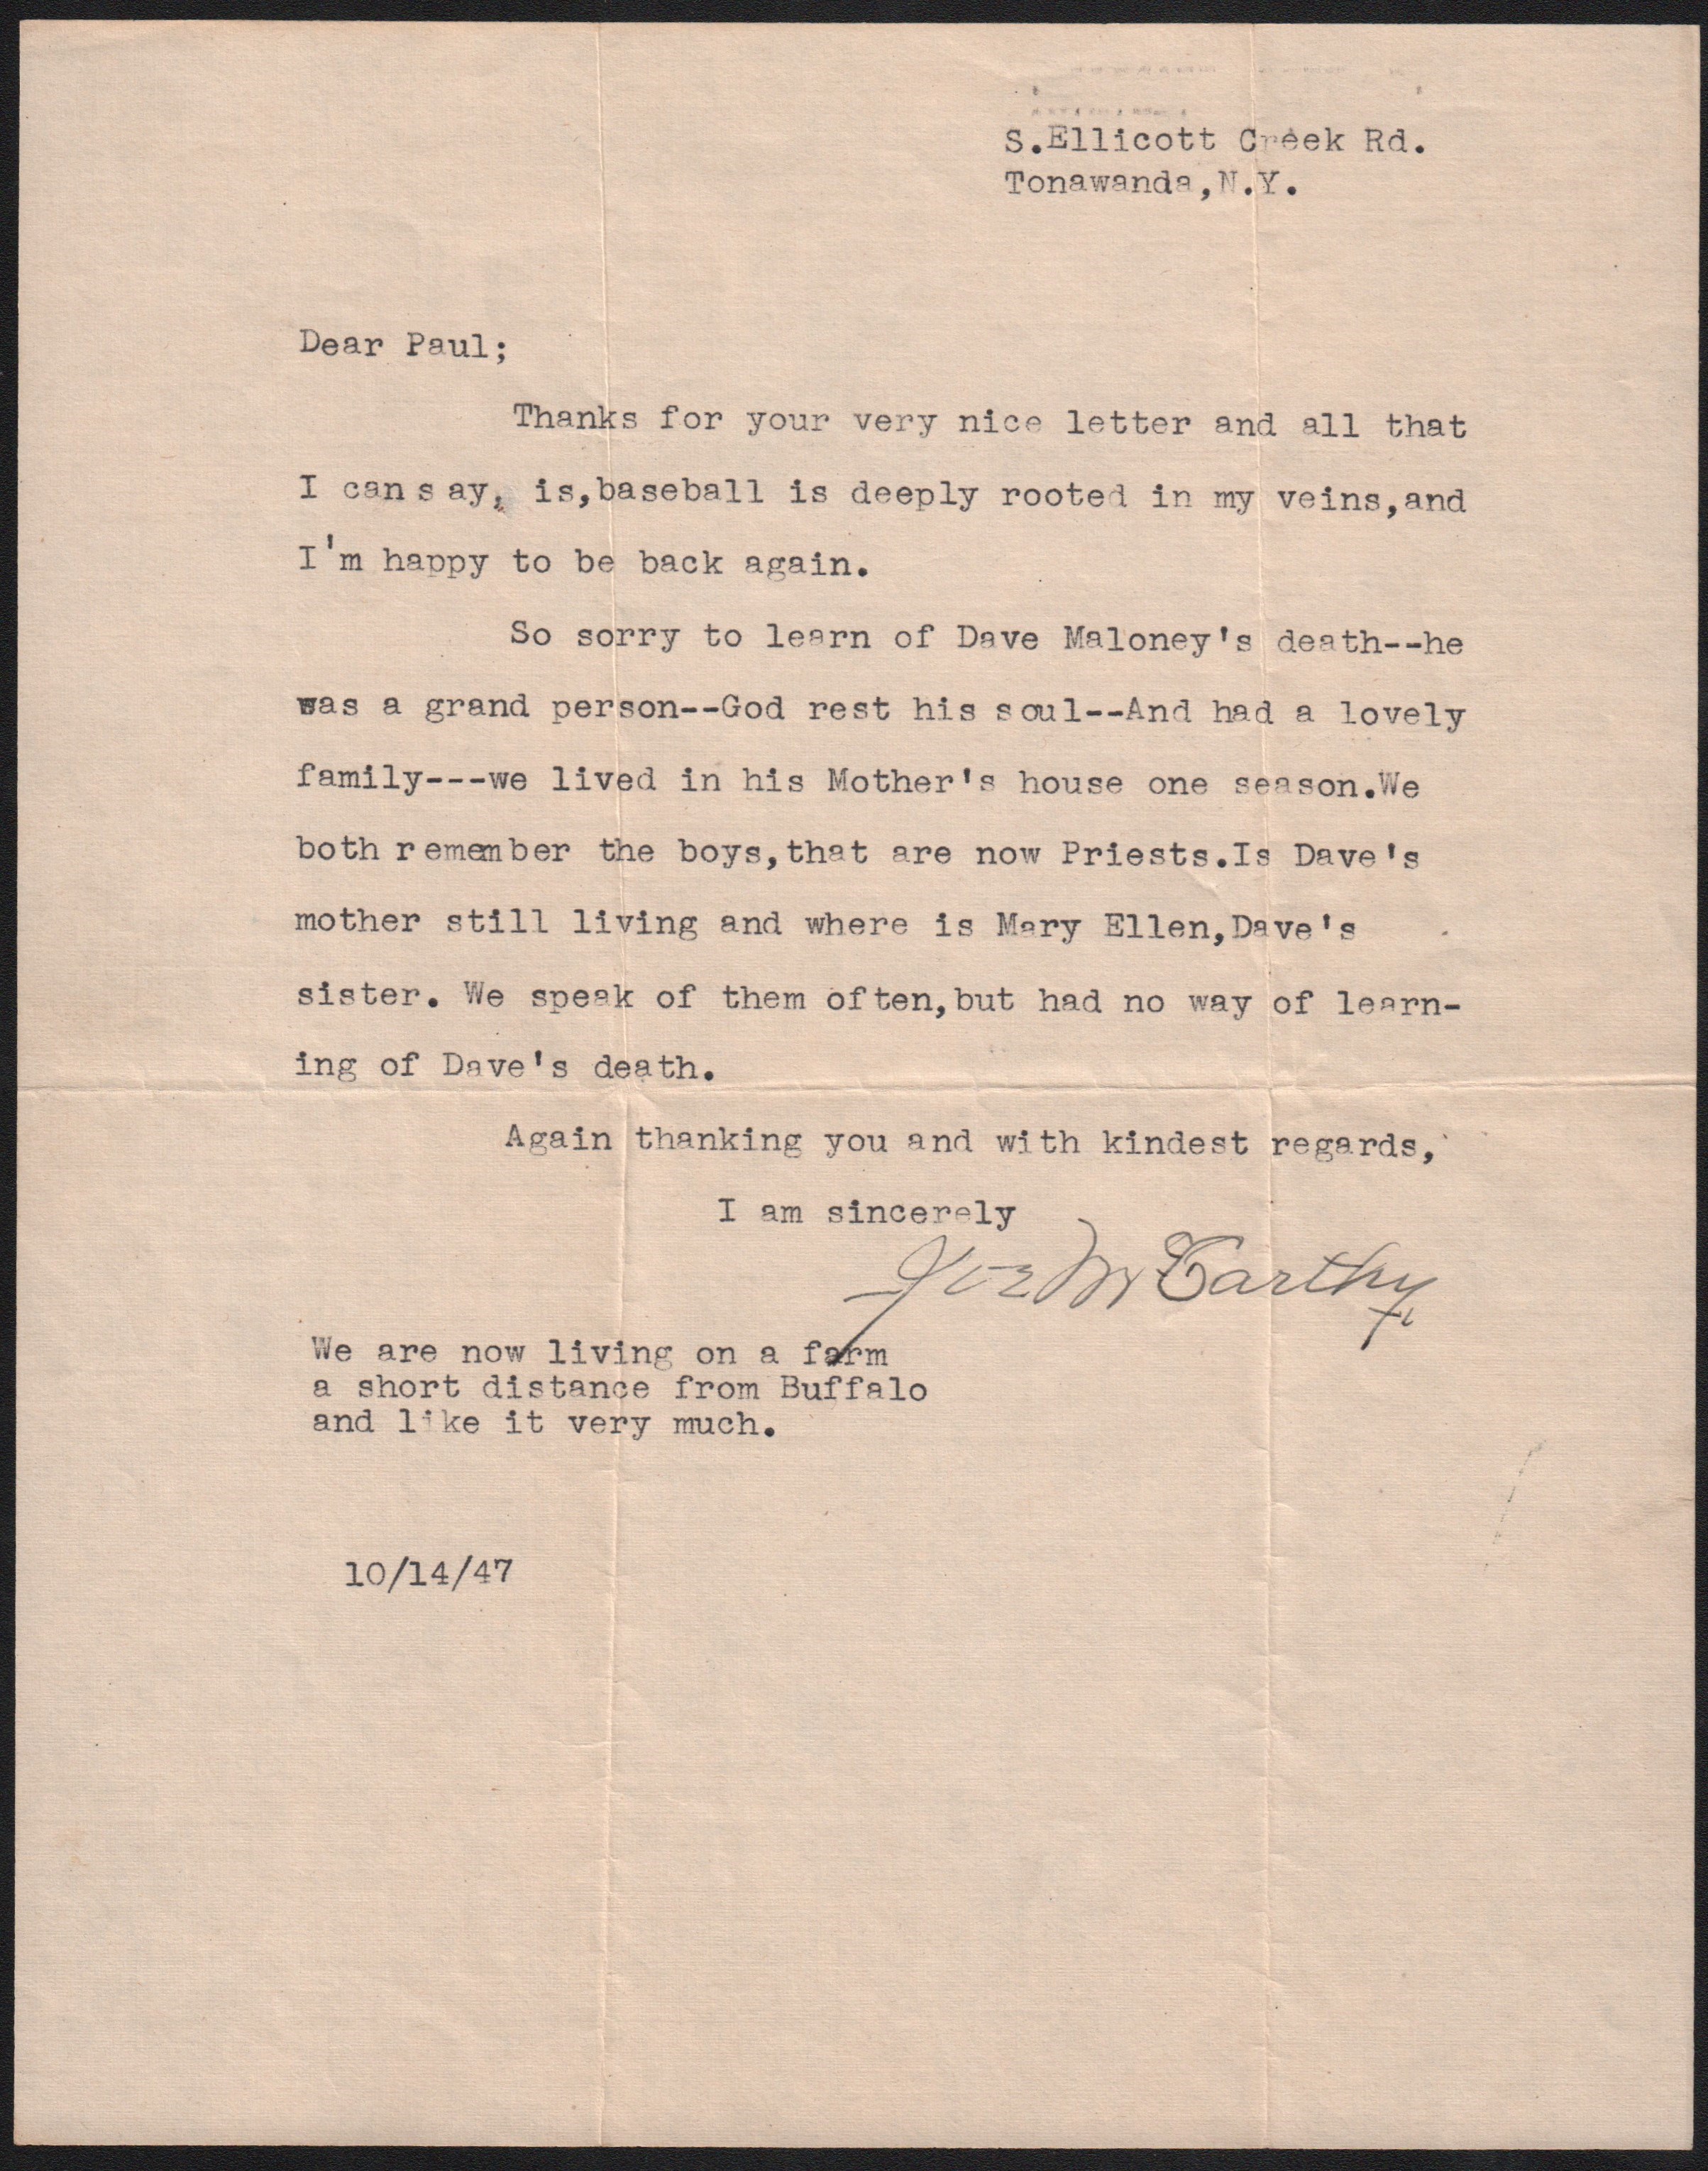 Baseball Autographs - 1947 Joe McCarthy Letter to Paul Frisz